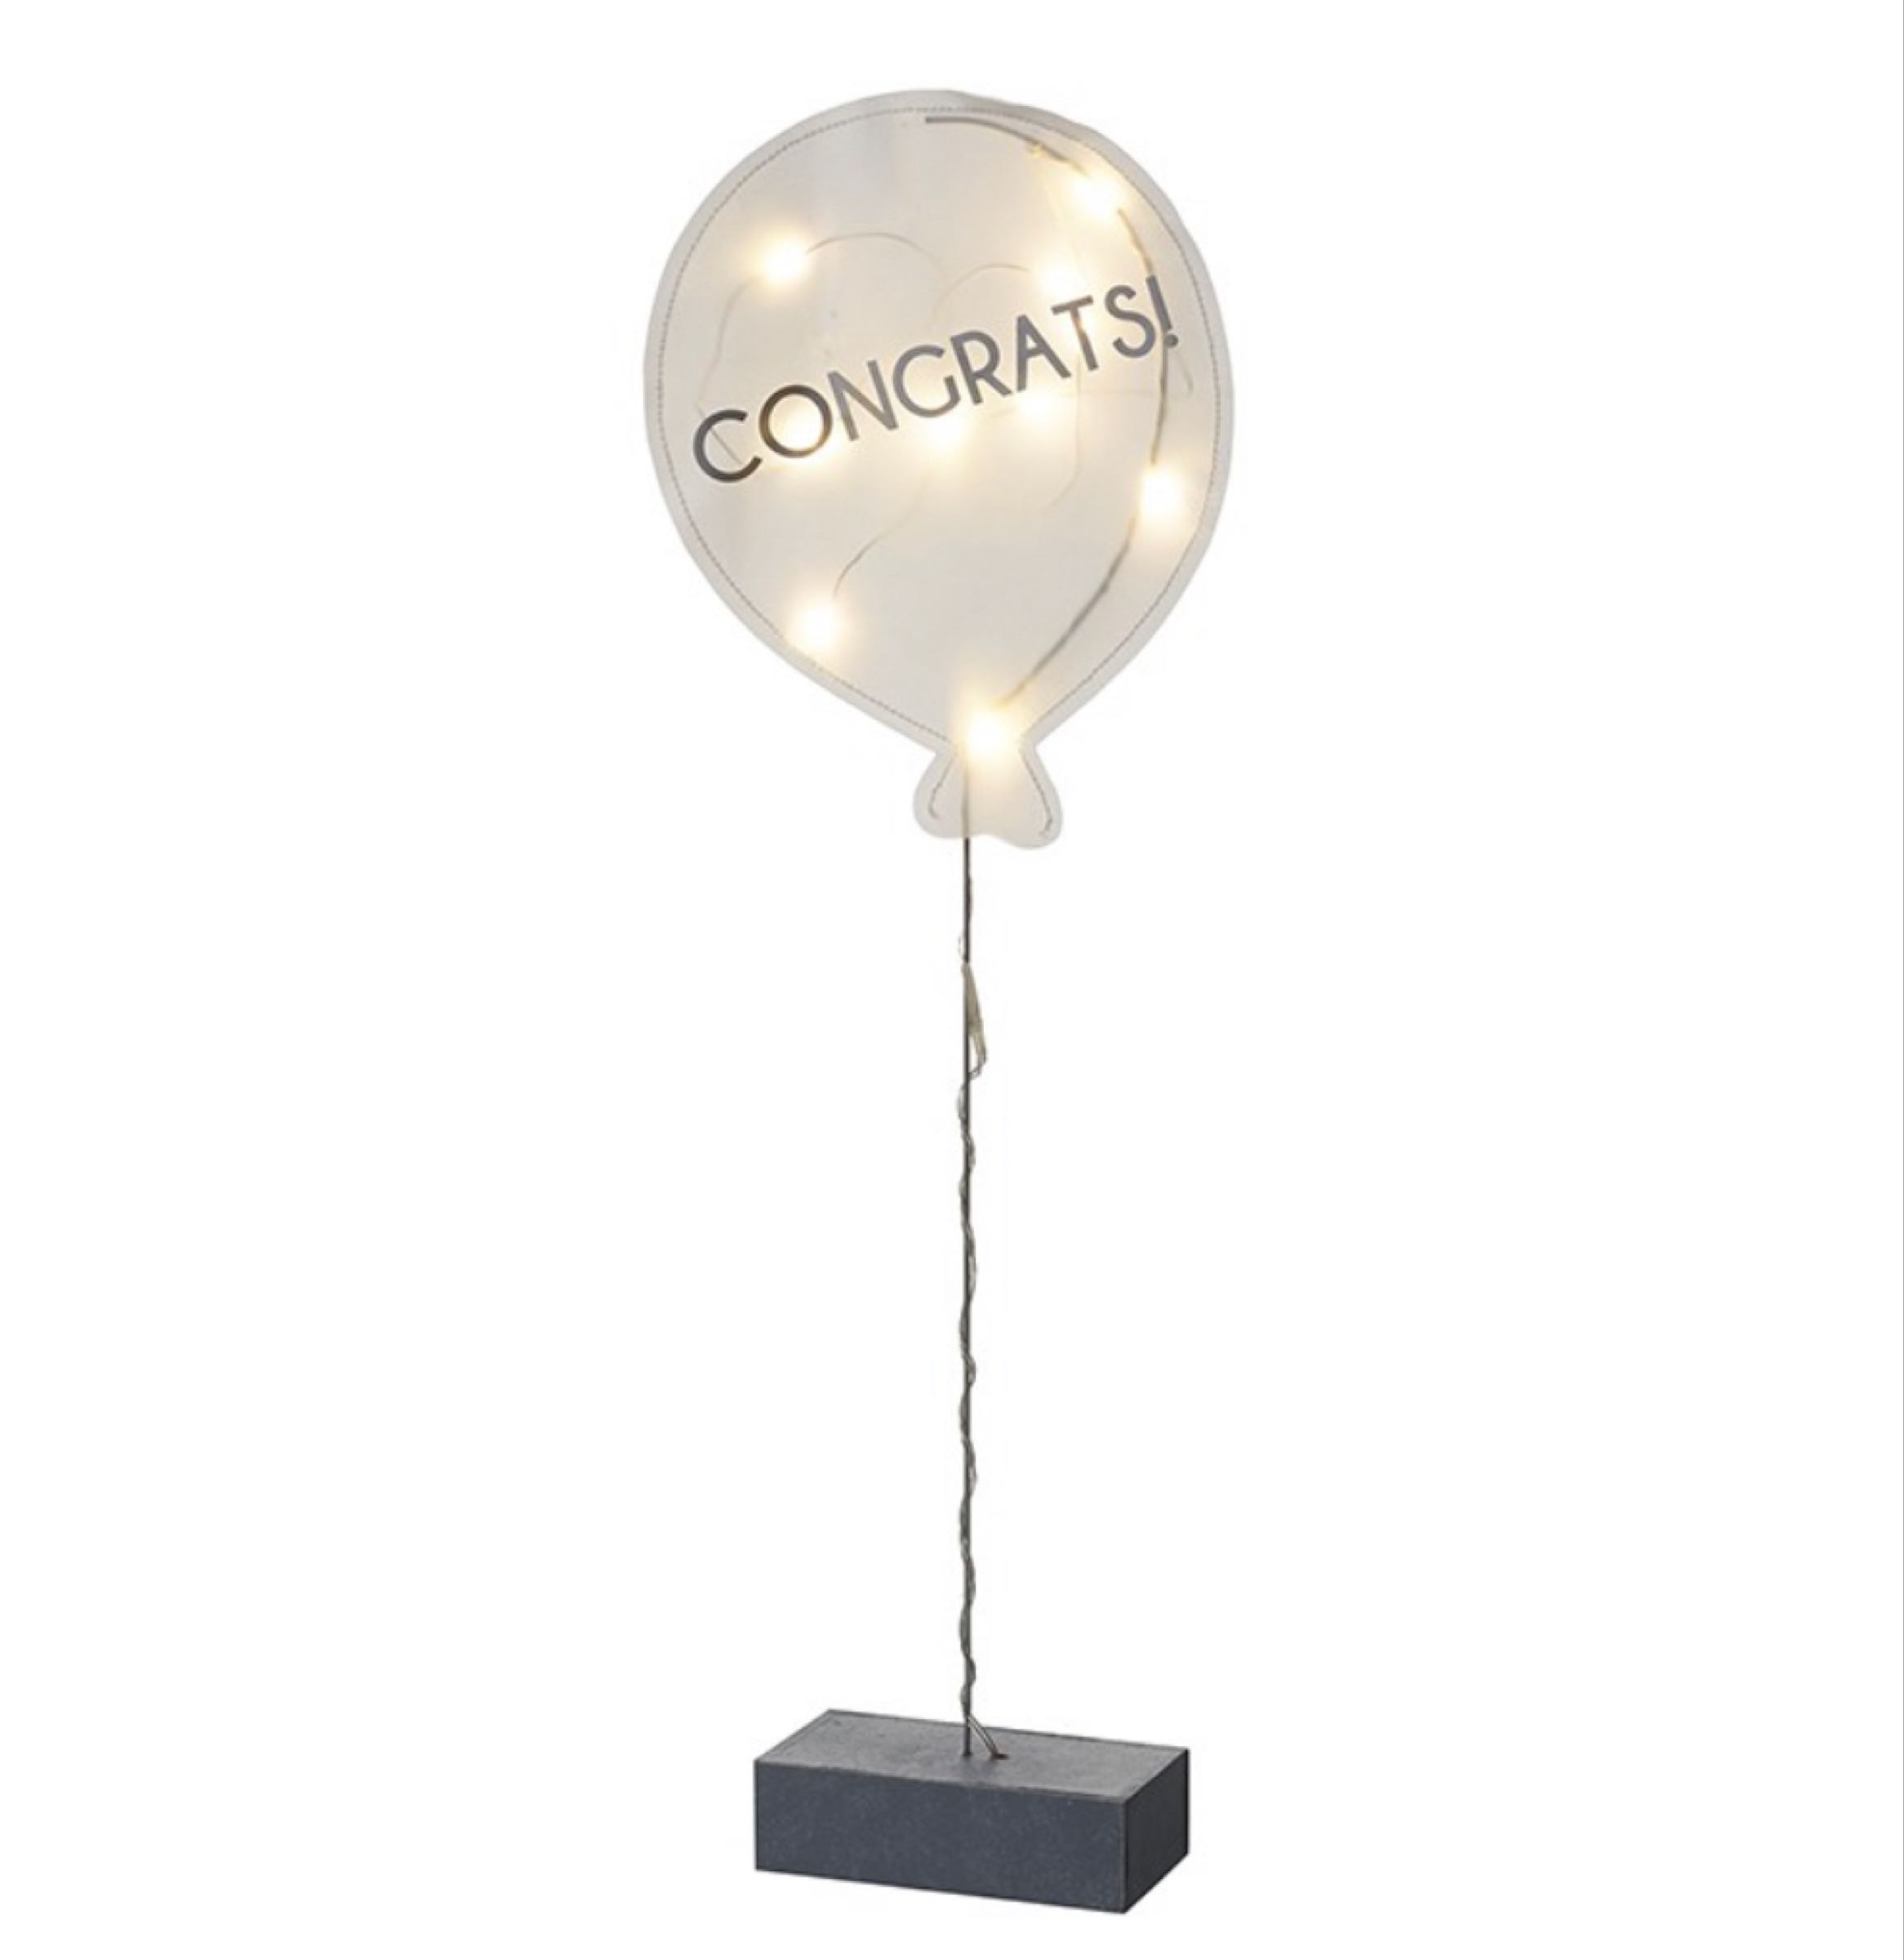 Light up fabric congrats balloon table decoration